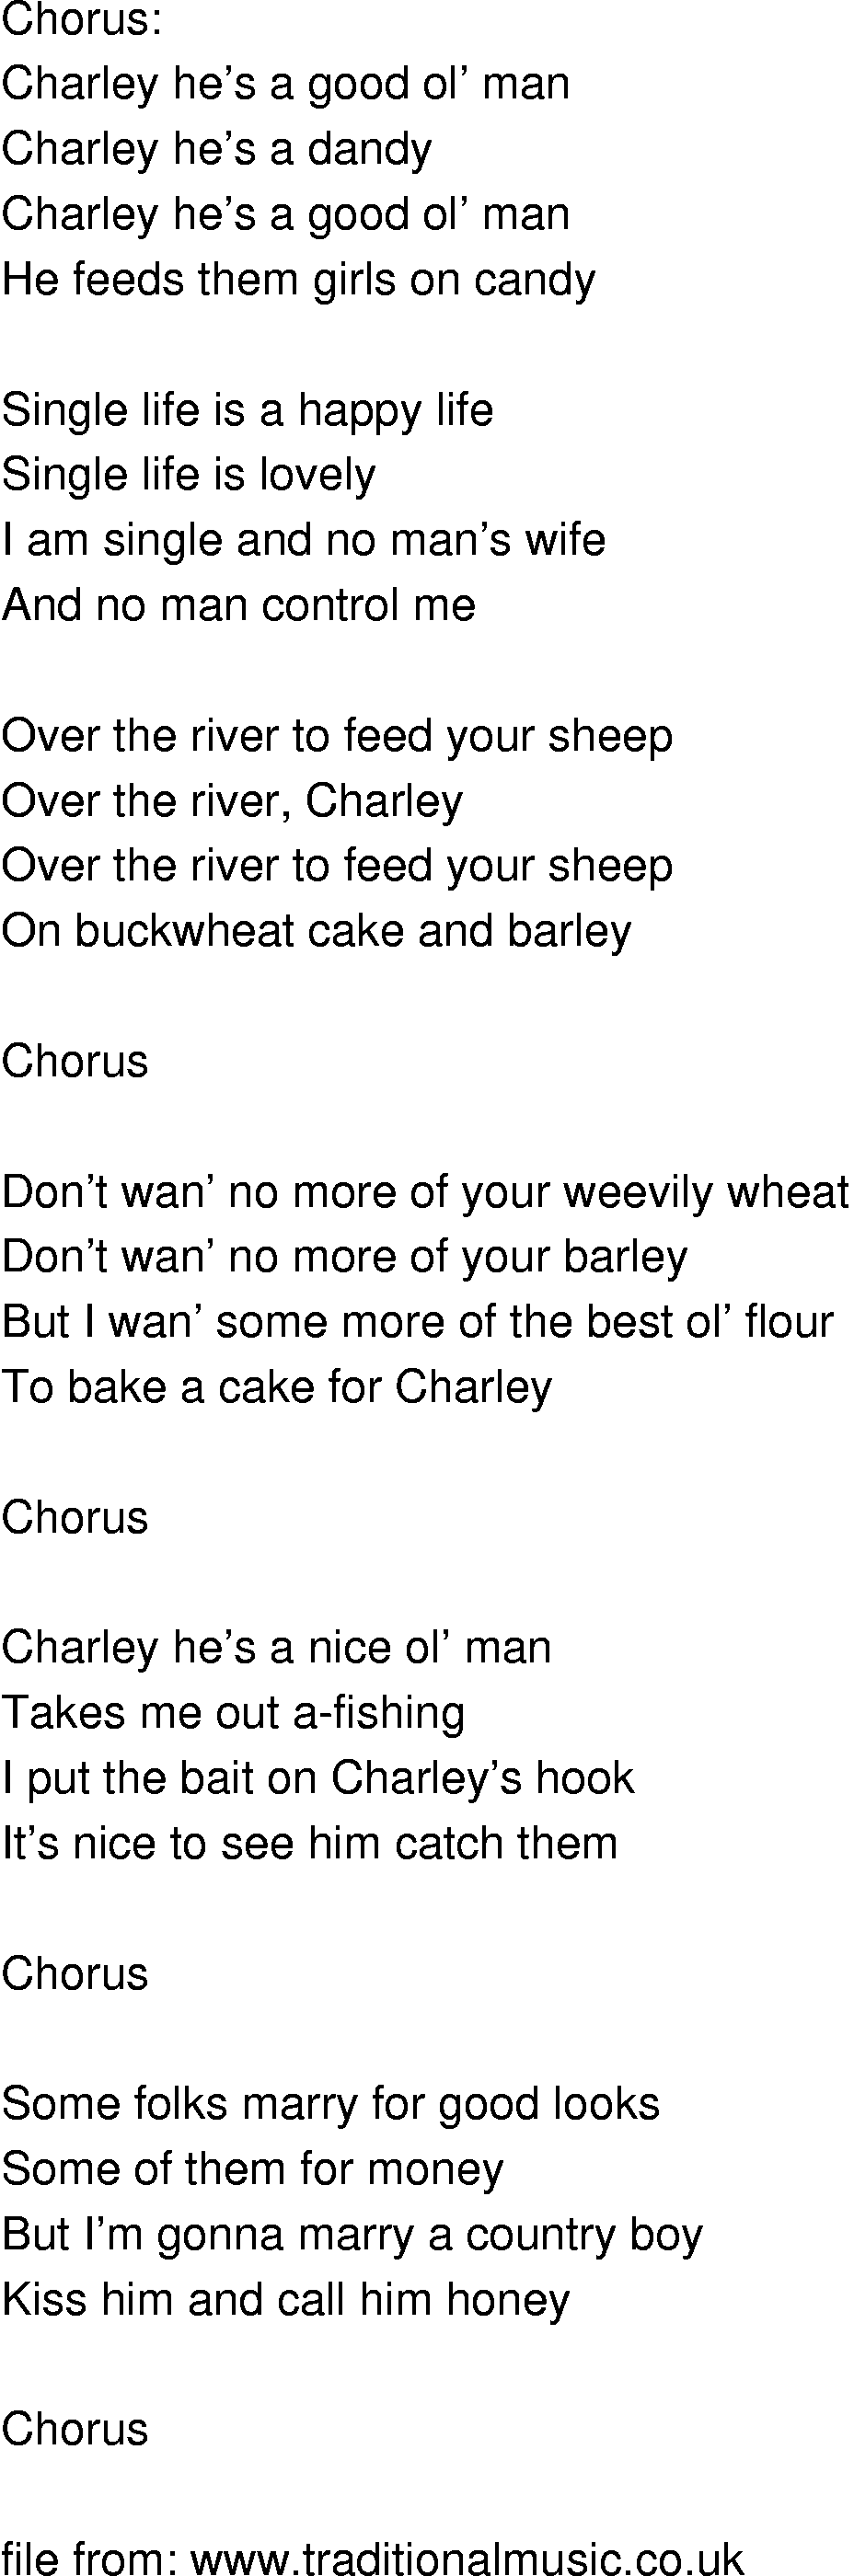 Old-Time (oldtimey) Song Lyrics - charley is a good ol man